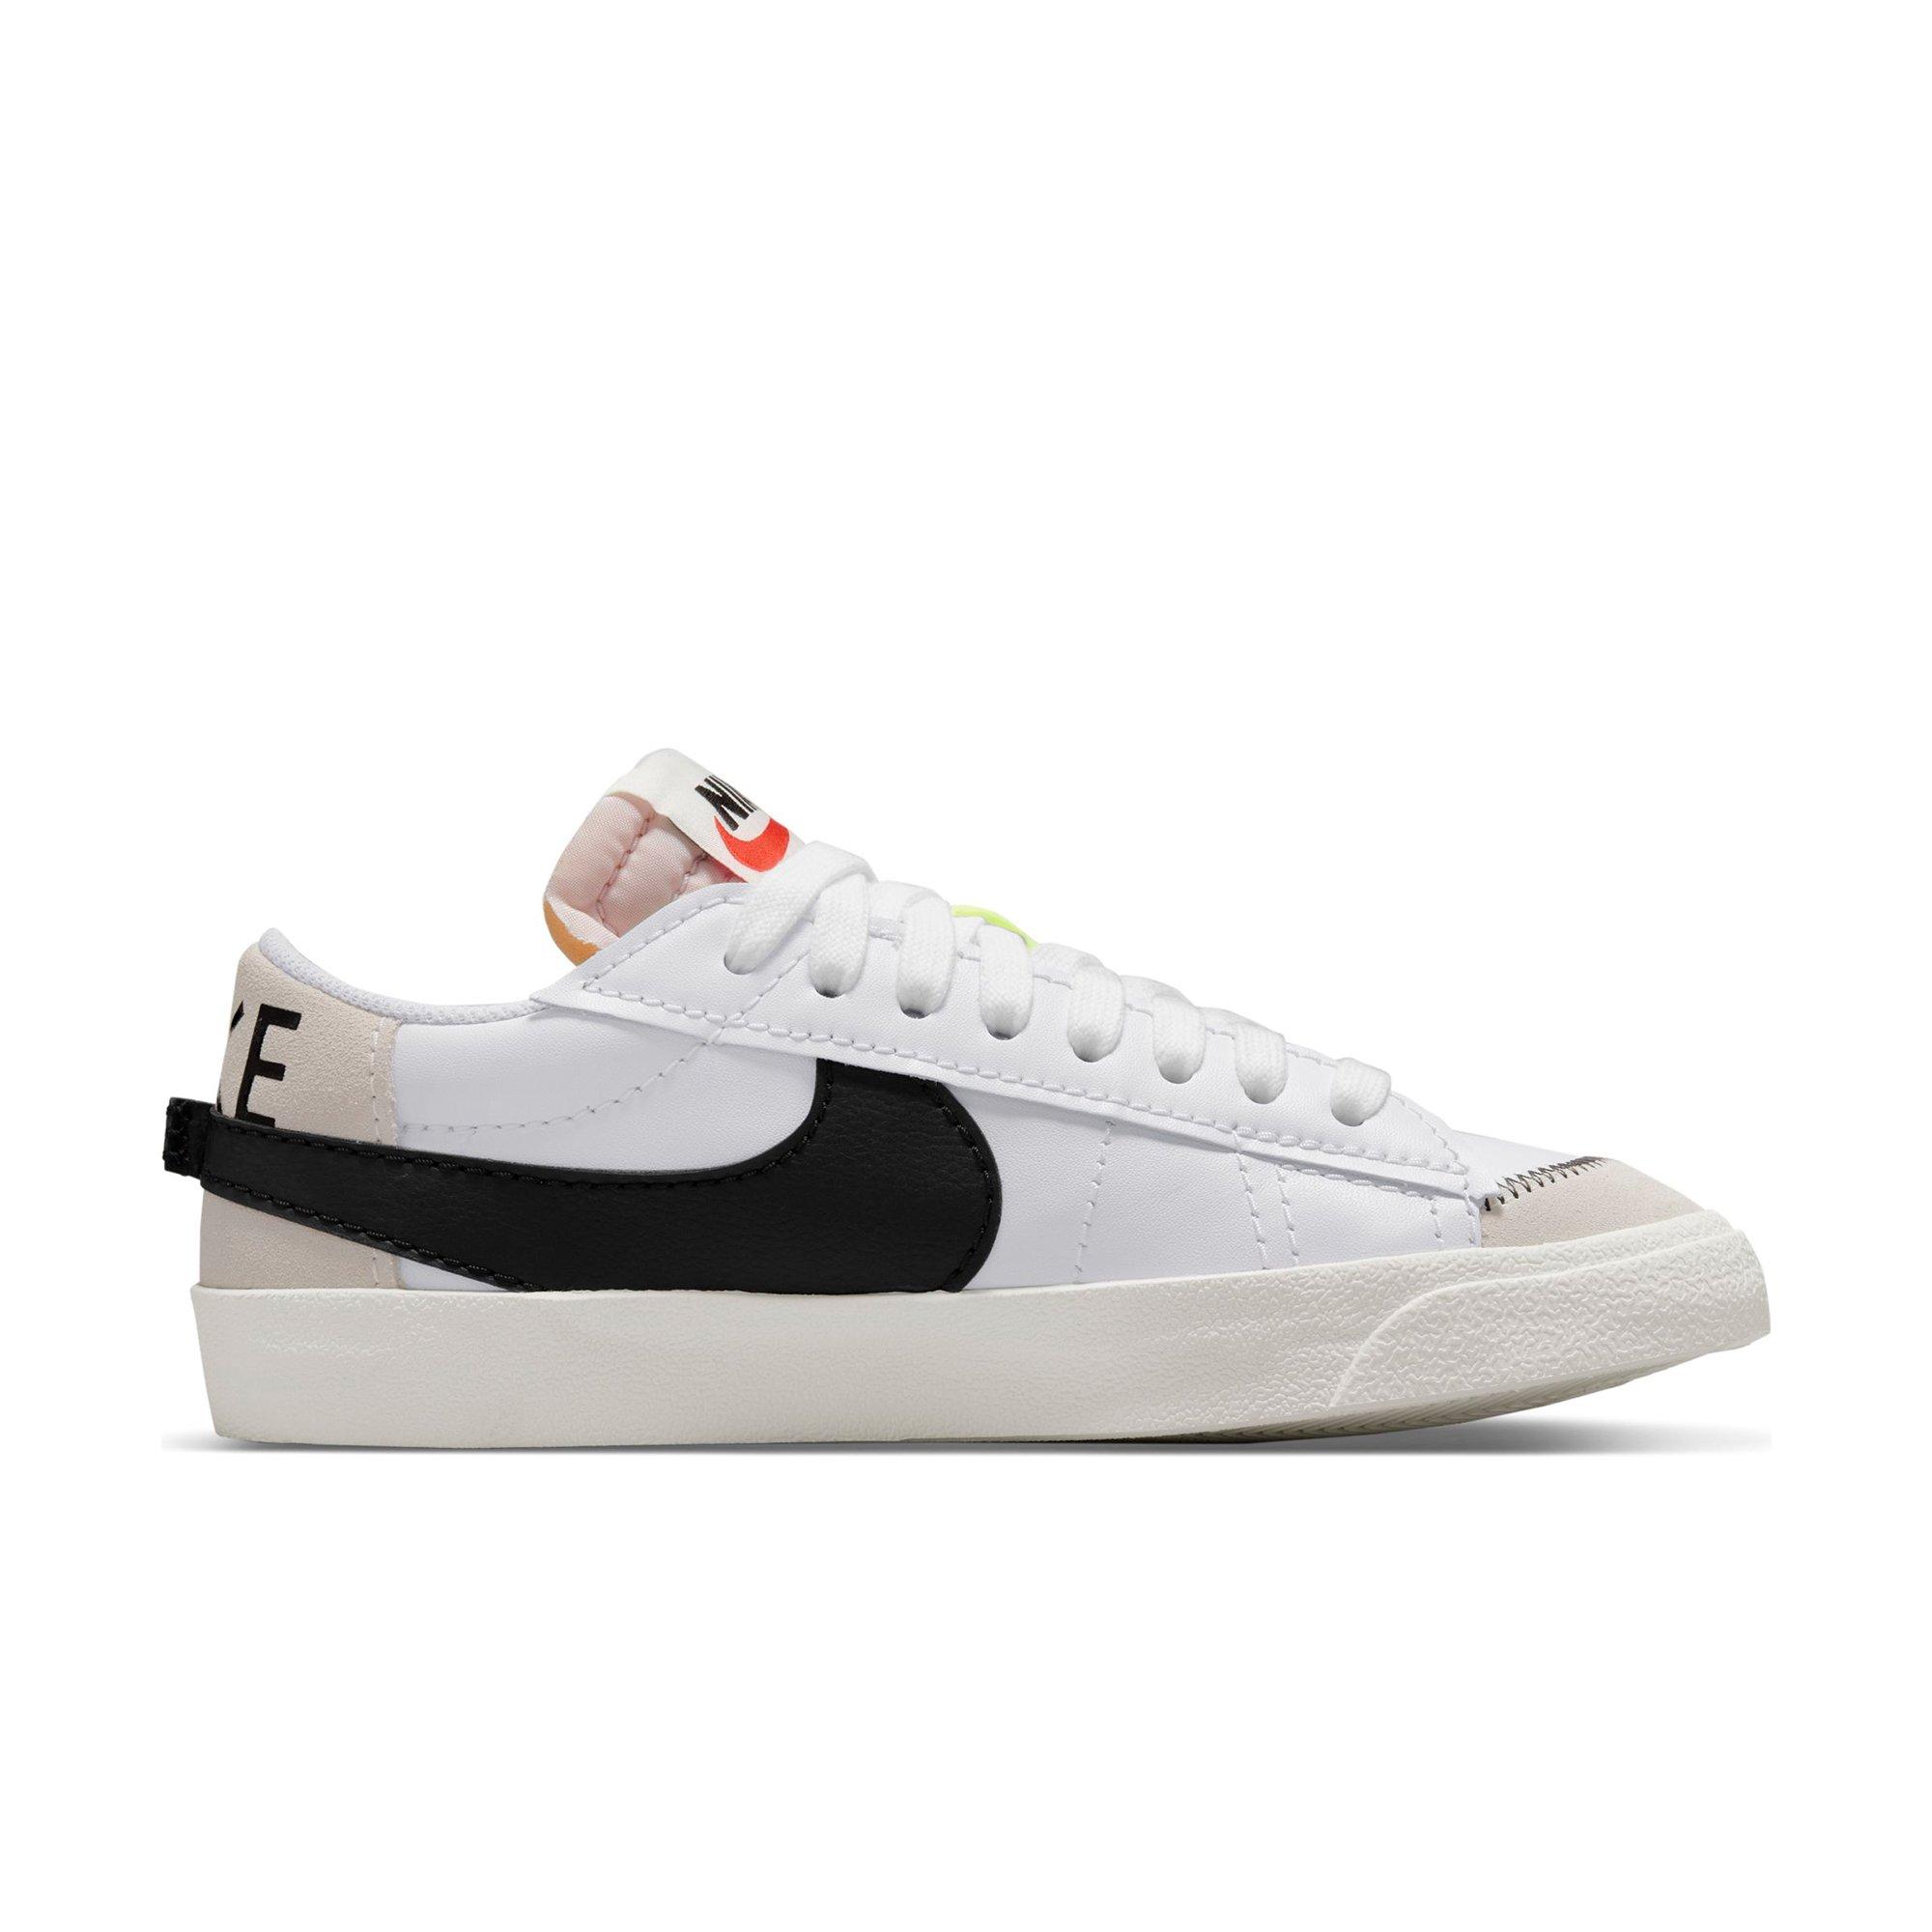 Nike Blazer Low Jumbo "White/Black/Sail" Shoe